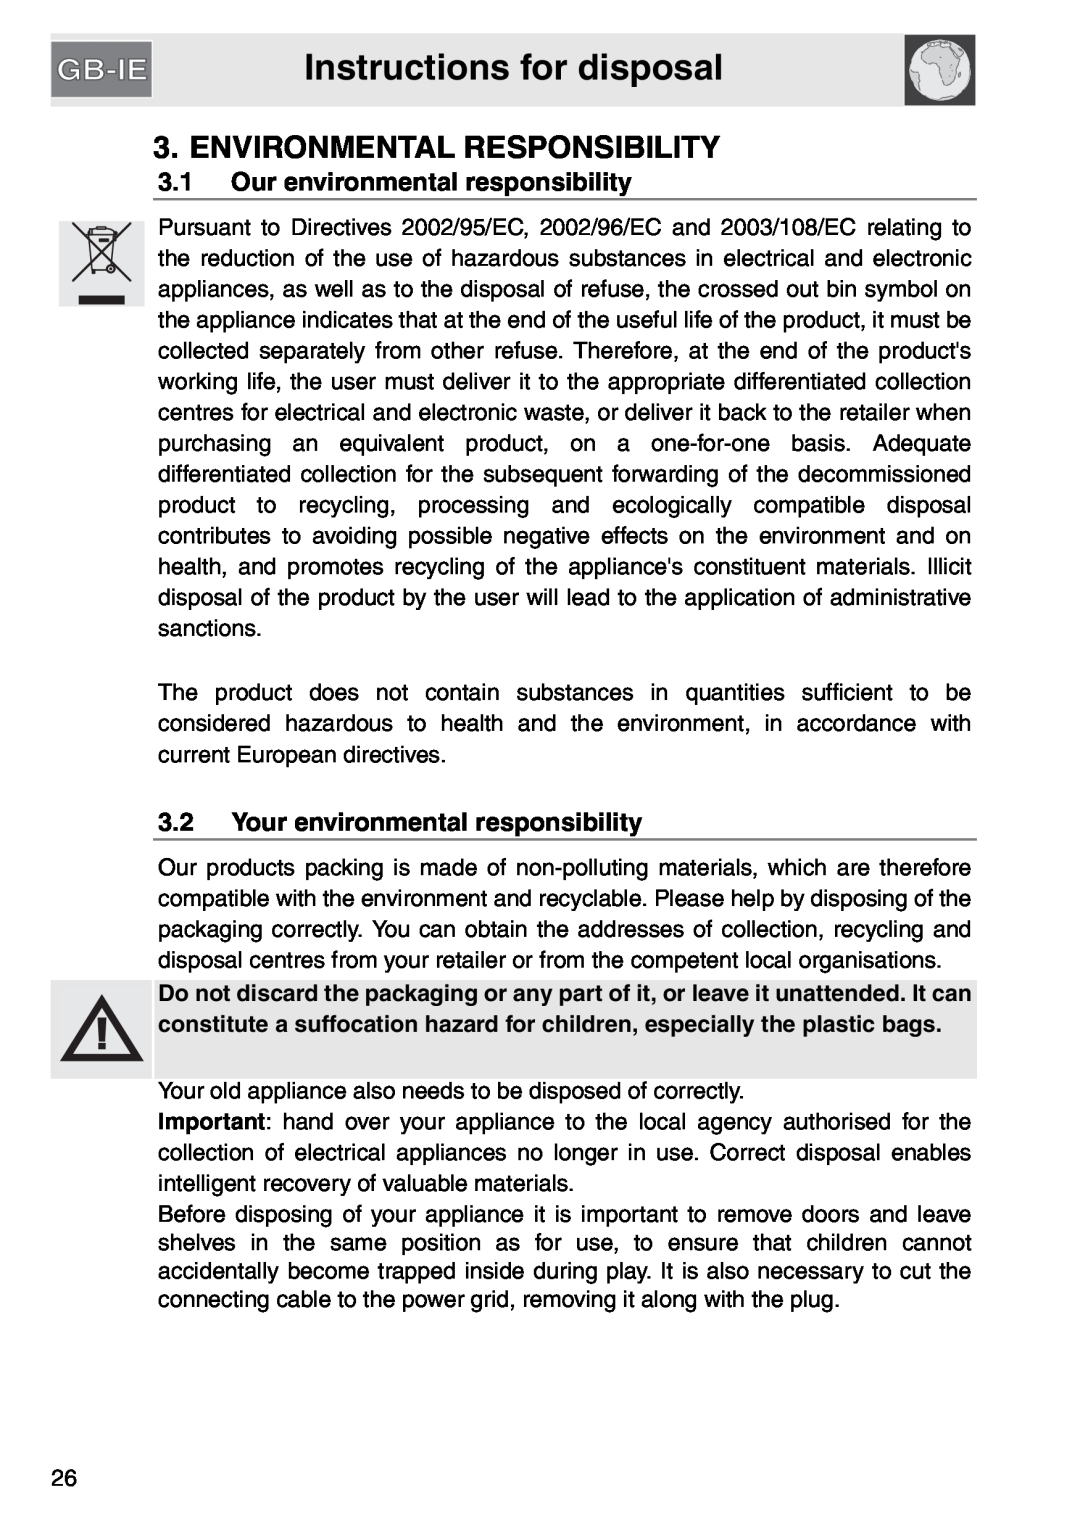 Smeg gas cooktop, PGA64 manual Instructions for disposal, Environmental Responsibility, 3.1Our environmental responsibility 